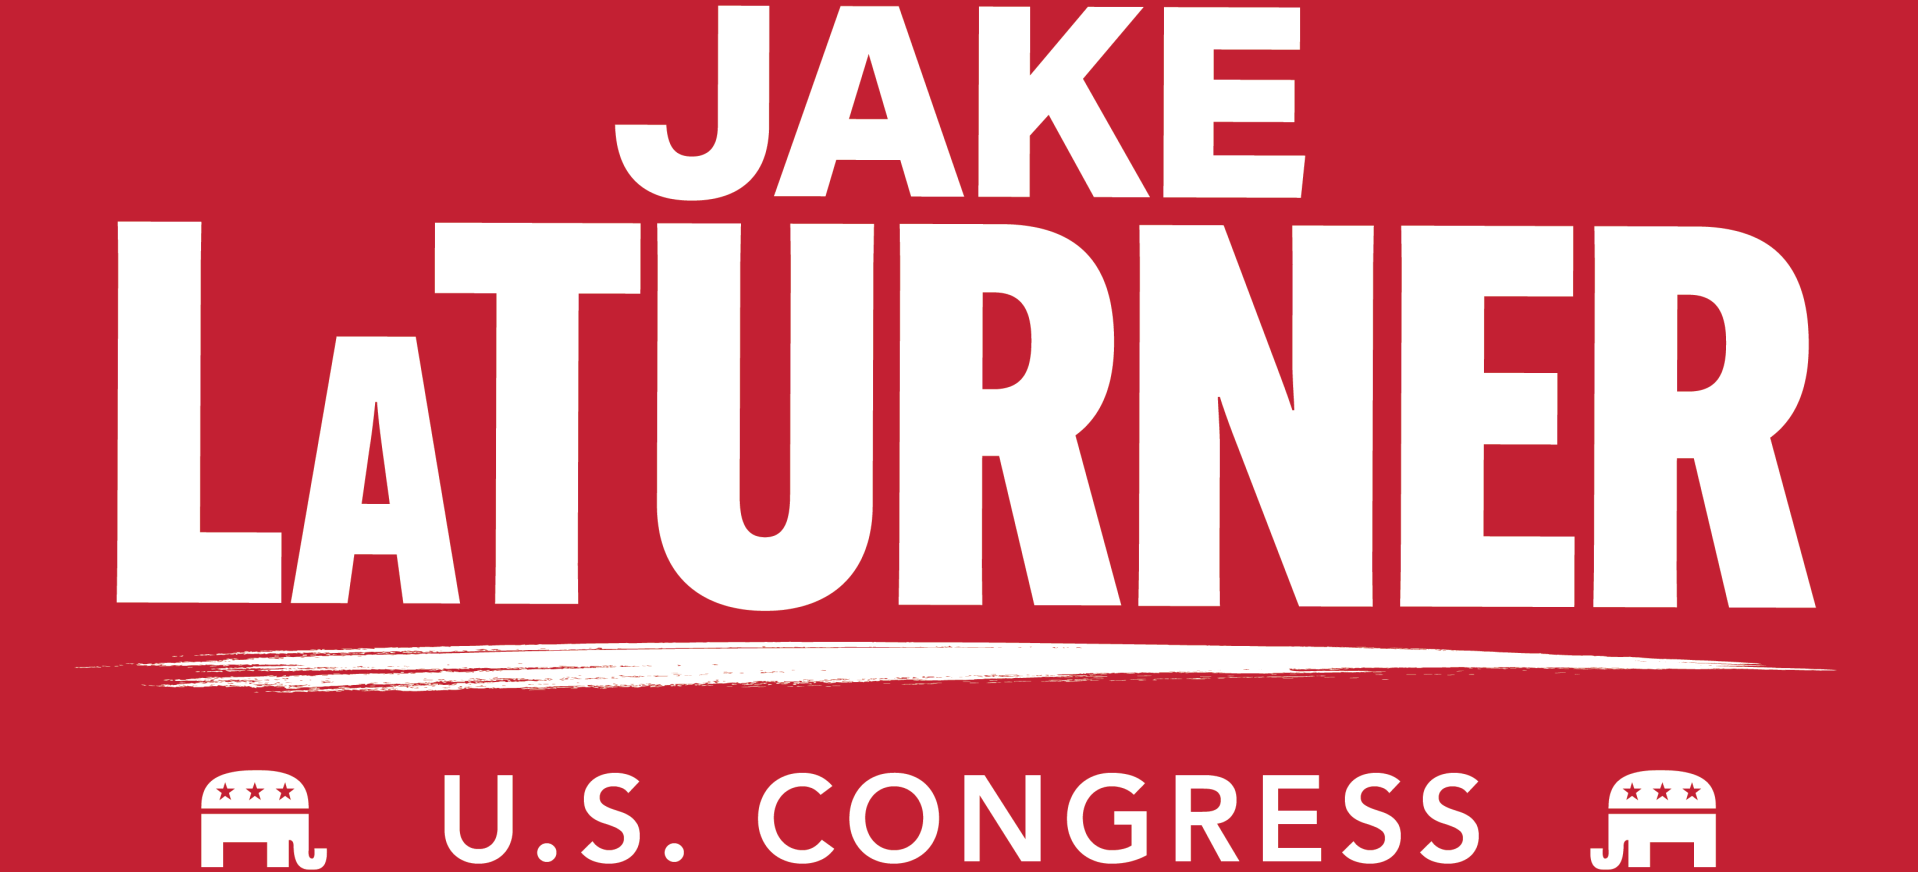 Jake LaTurner for Congress Logo